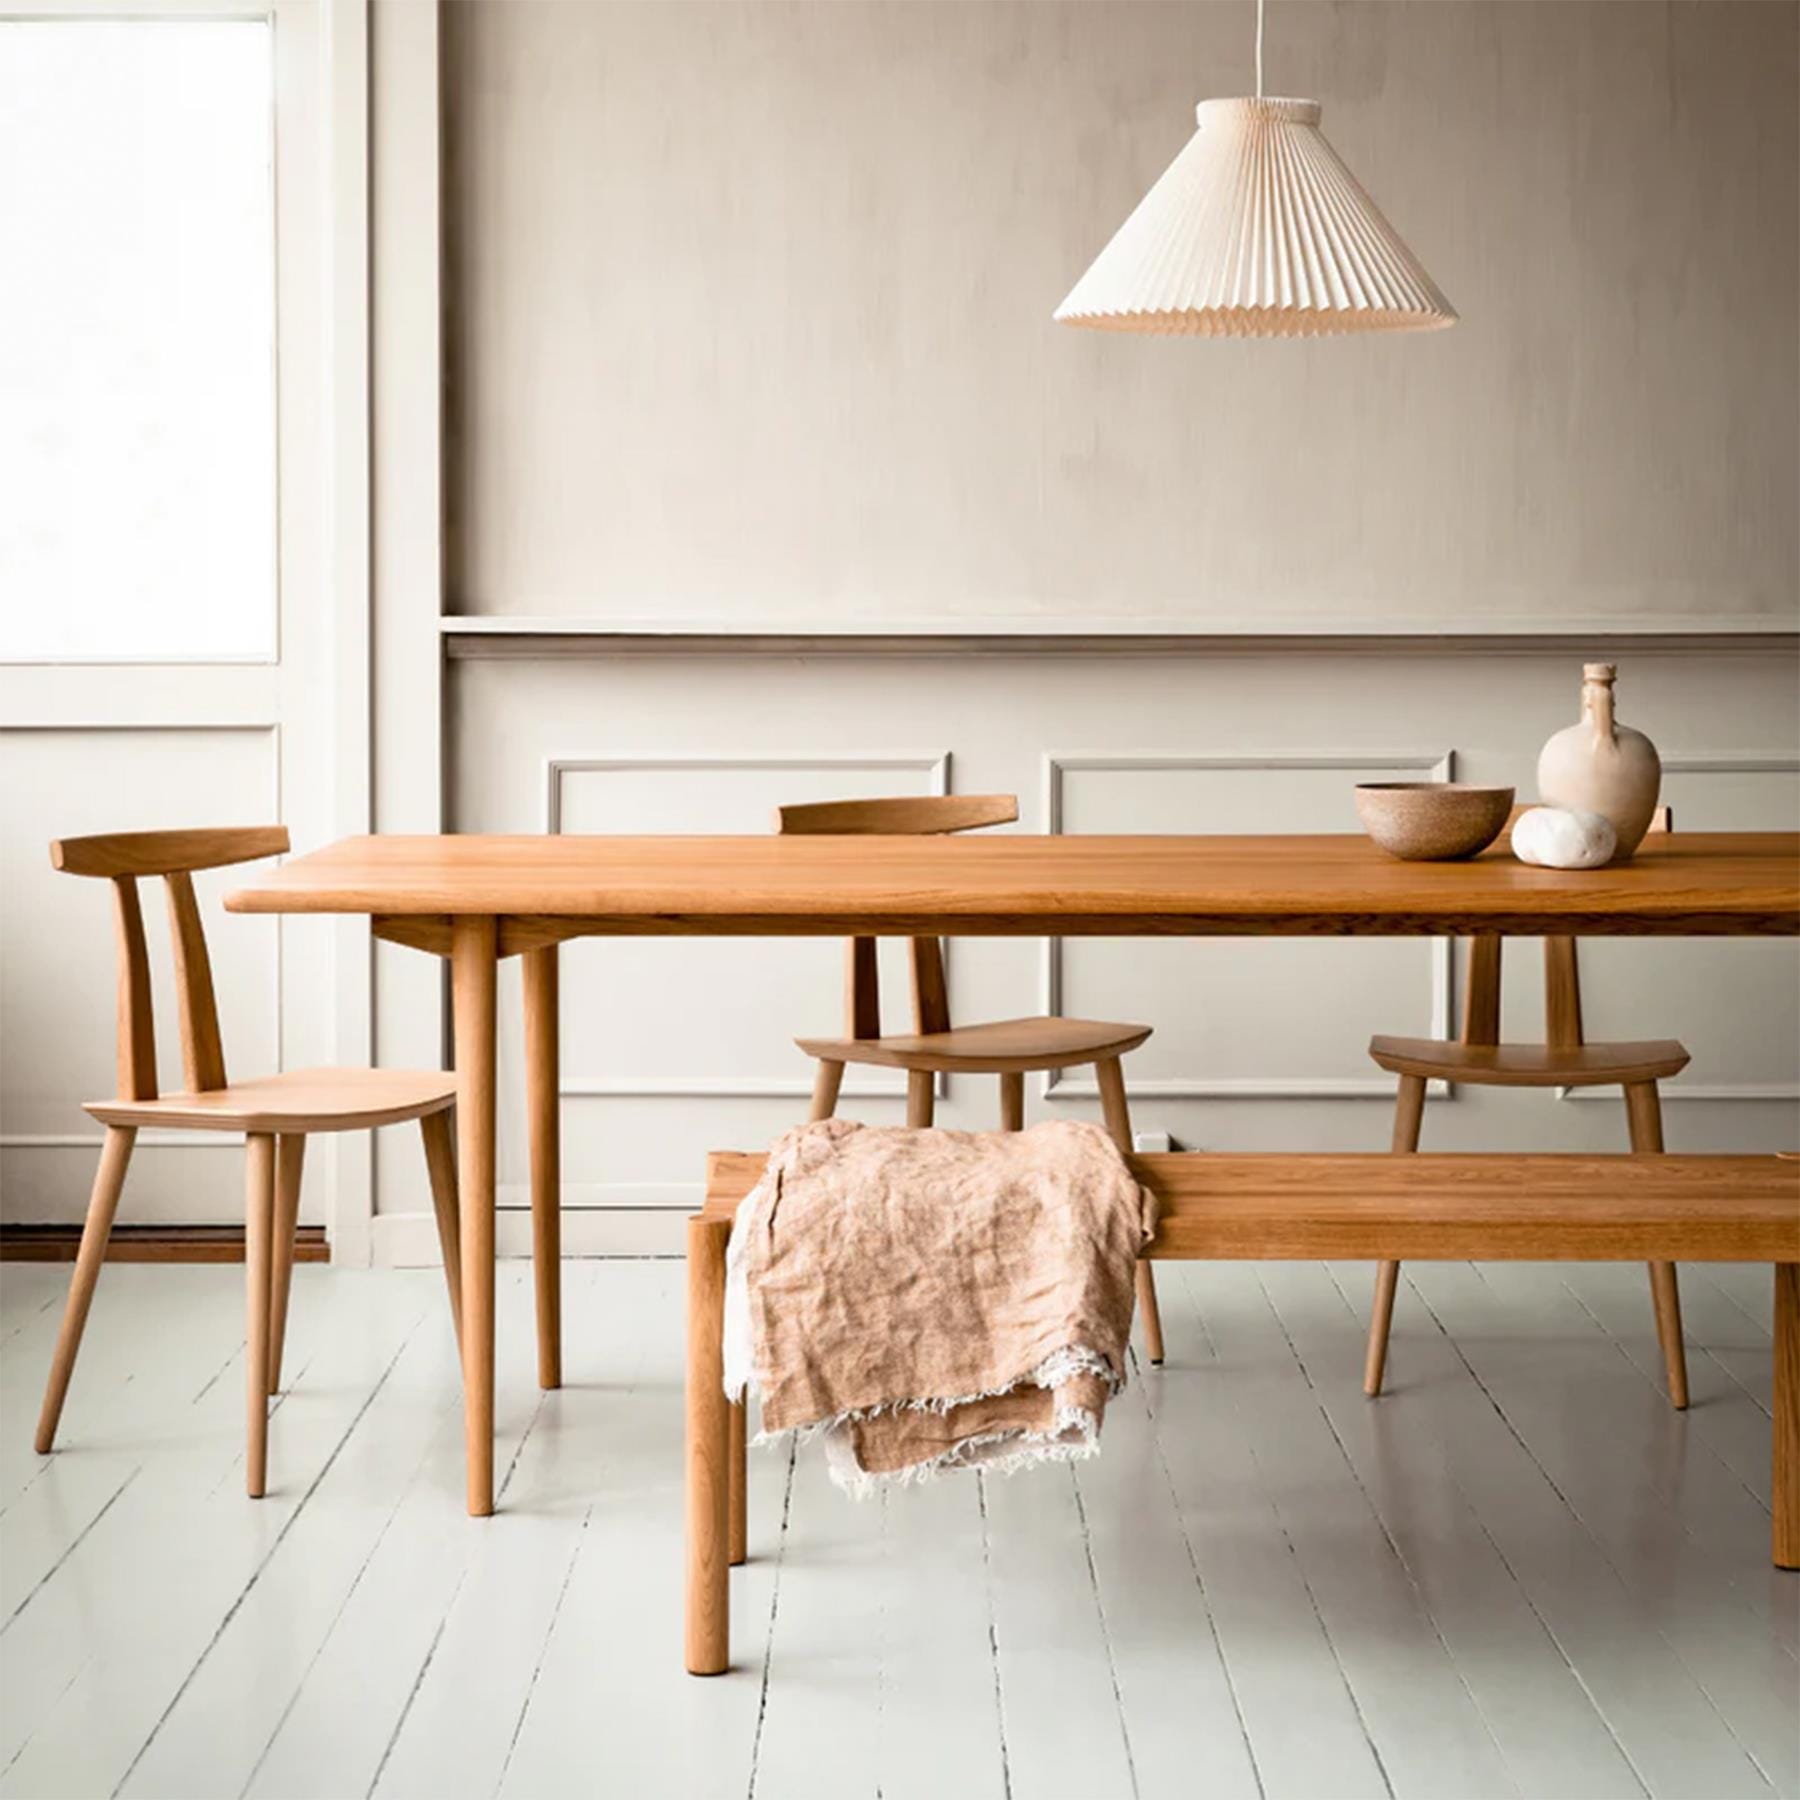 Make Nordic Holmen Rectangular Dining Table Large Natural Oak Length 320cm Width 100cm Without Extra Leaves Light Wood Designer Furniture Fro